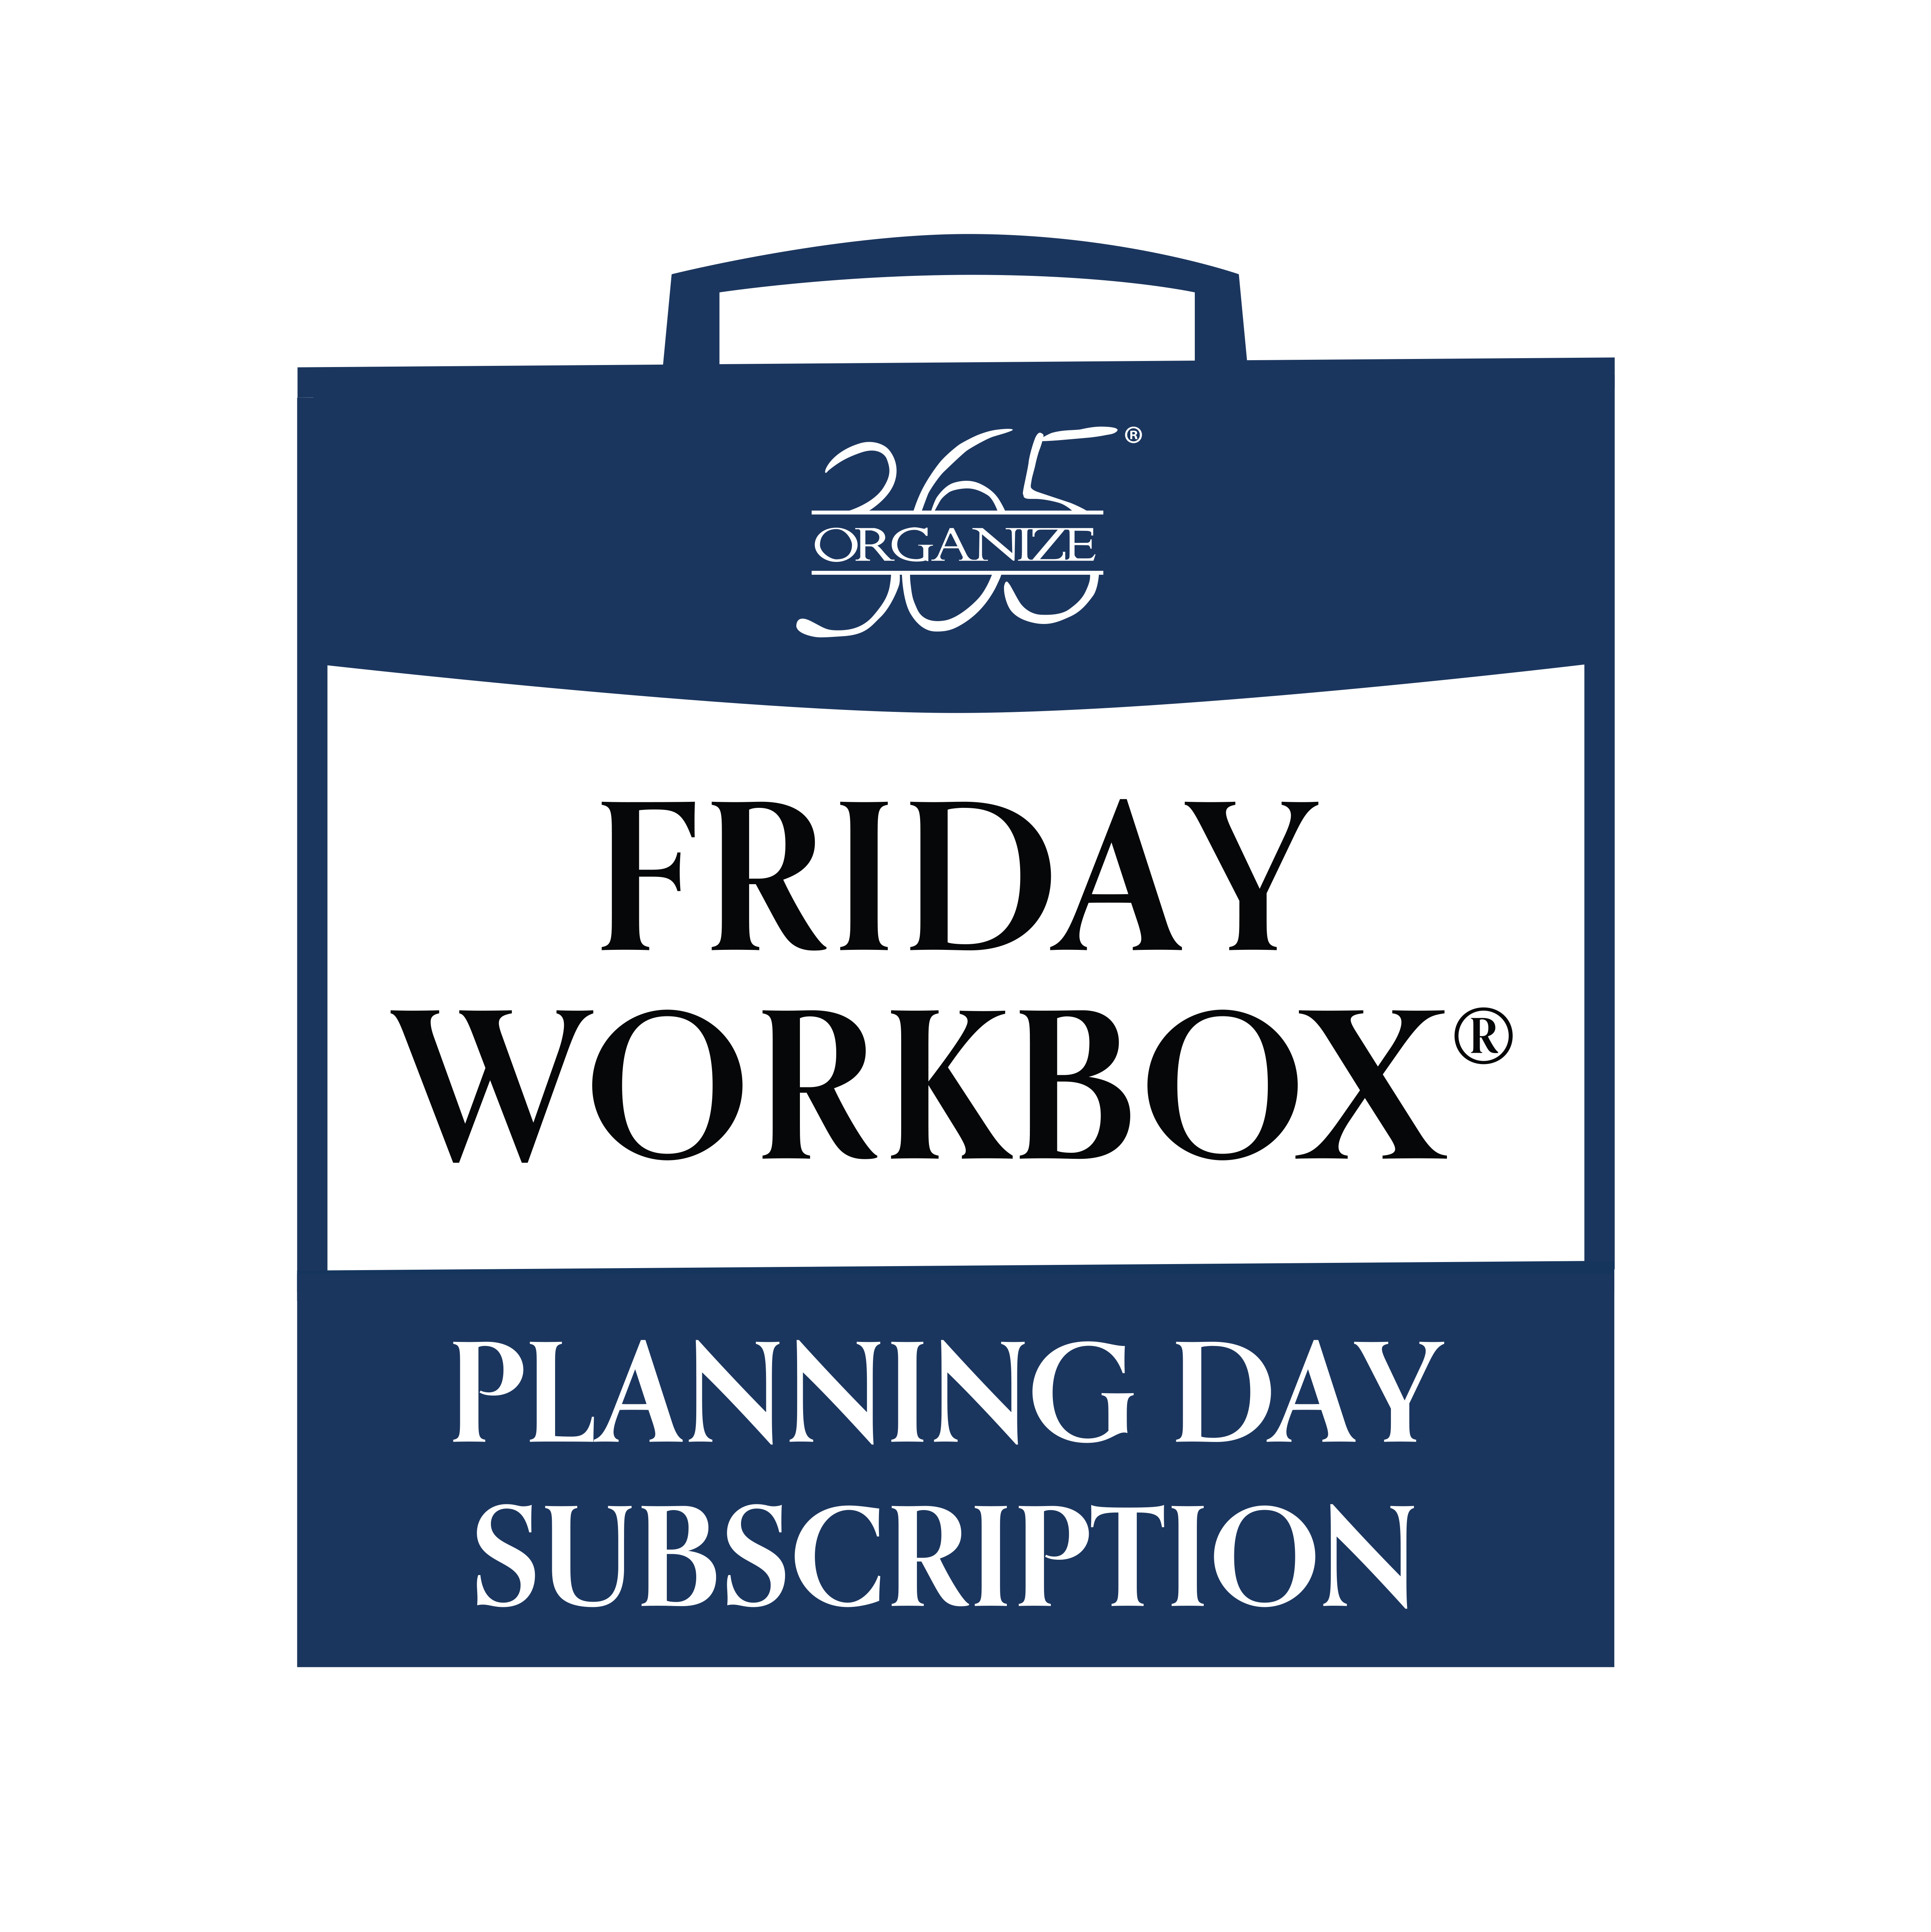 Friday Workbox planning day